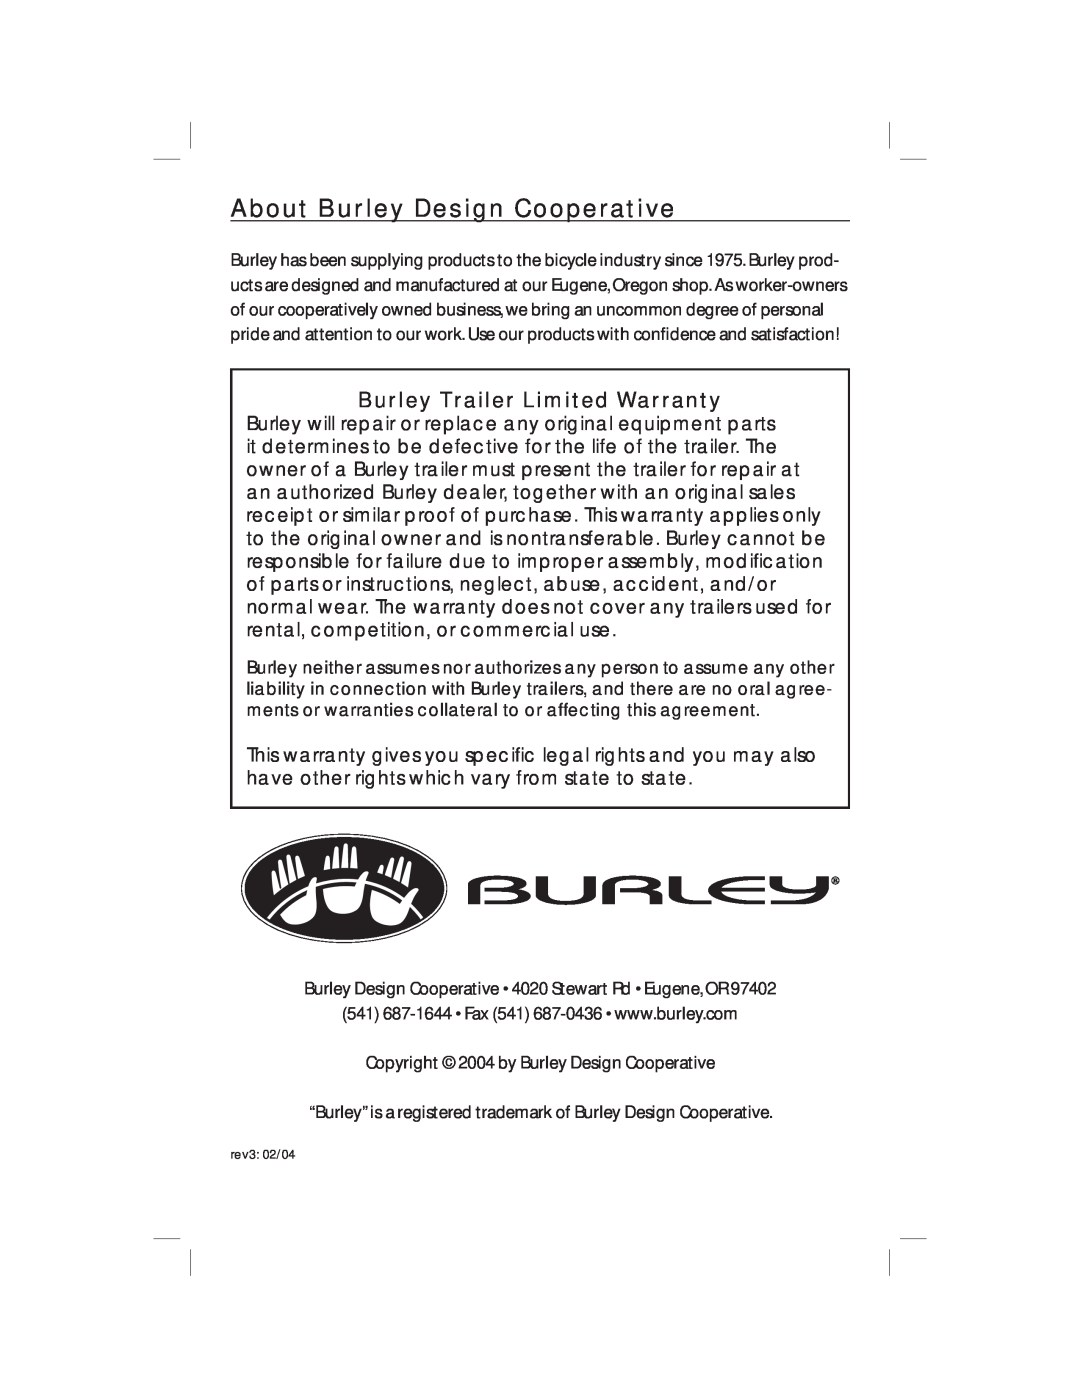 Burley HD 4485/86/87, HD 4435/36/37 warranty About Burley Design Cooperative, Burley Trailer Limited Warranty 